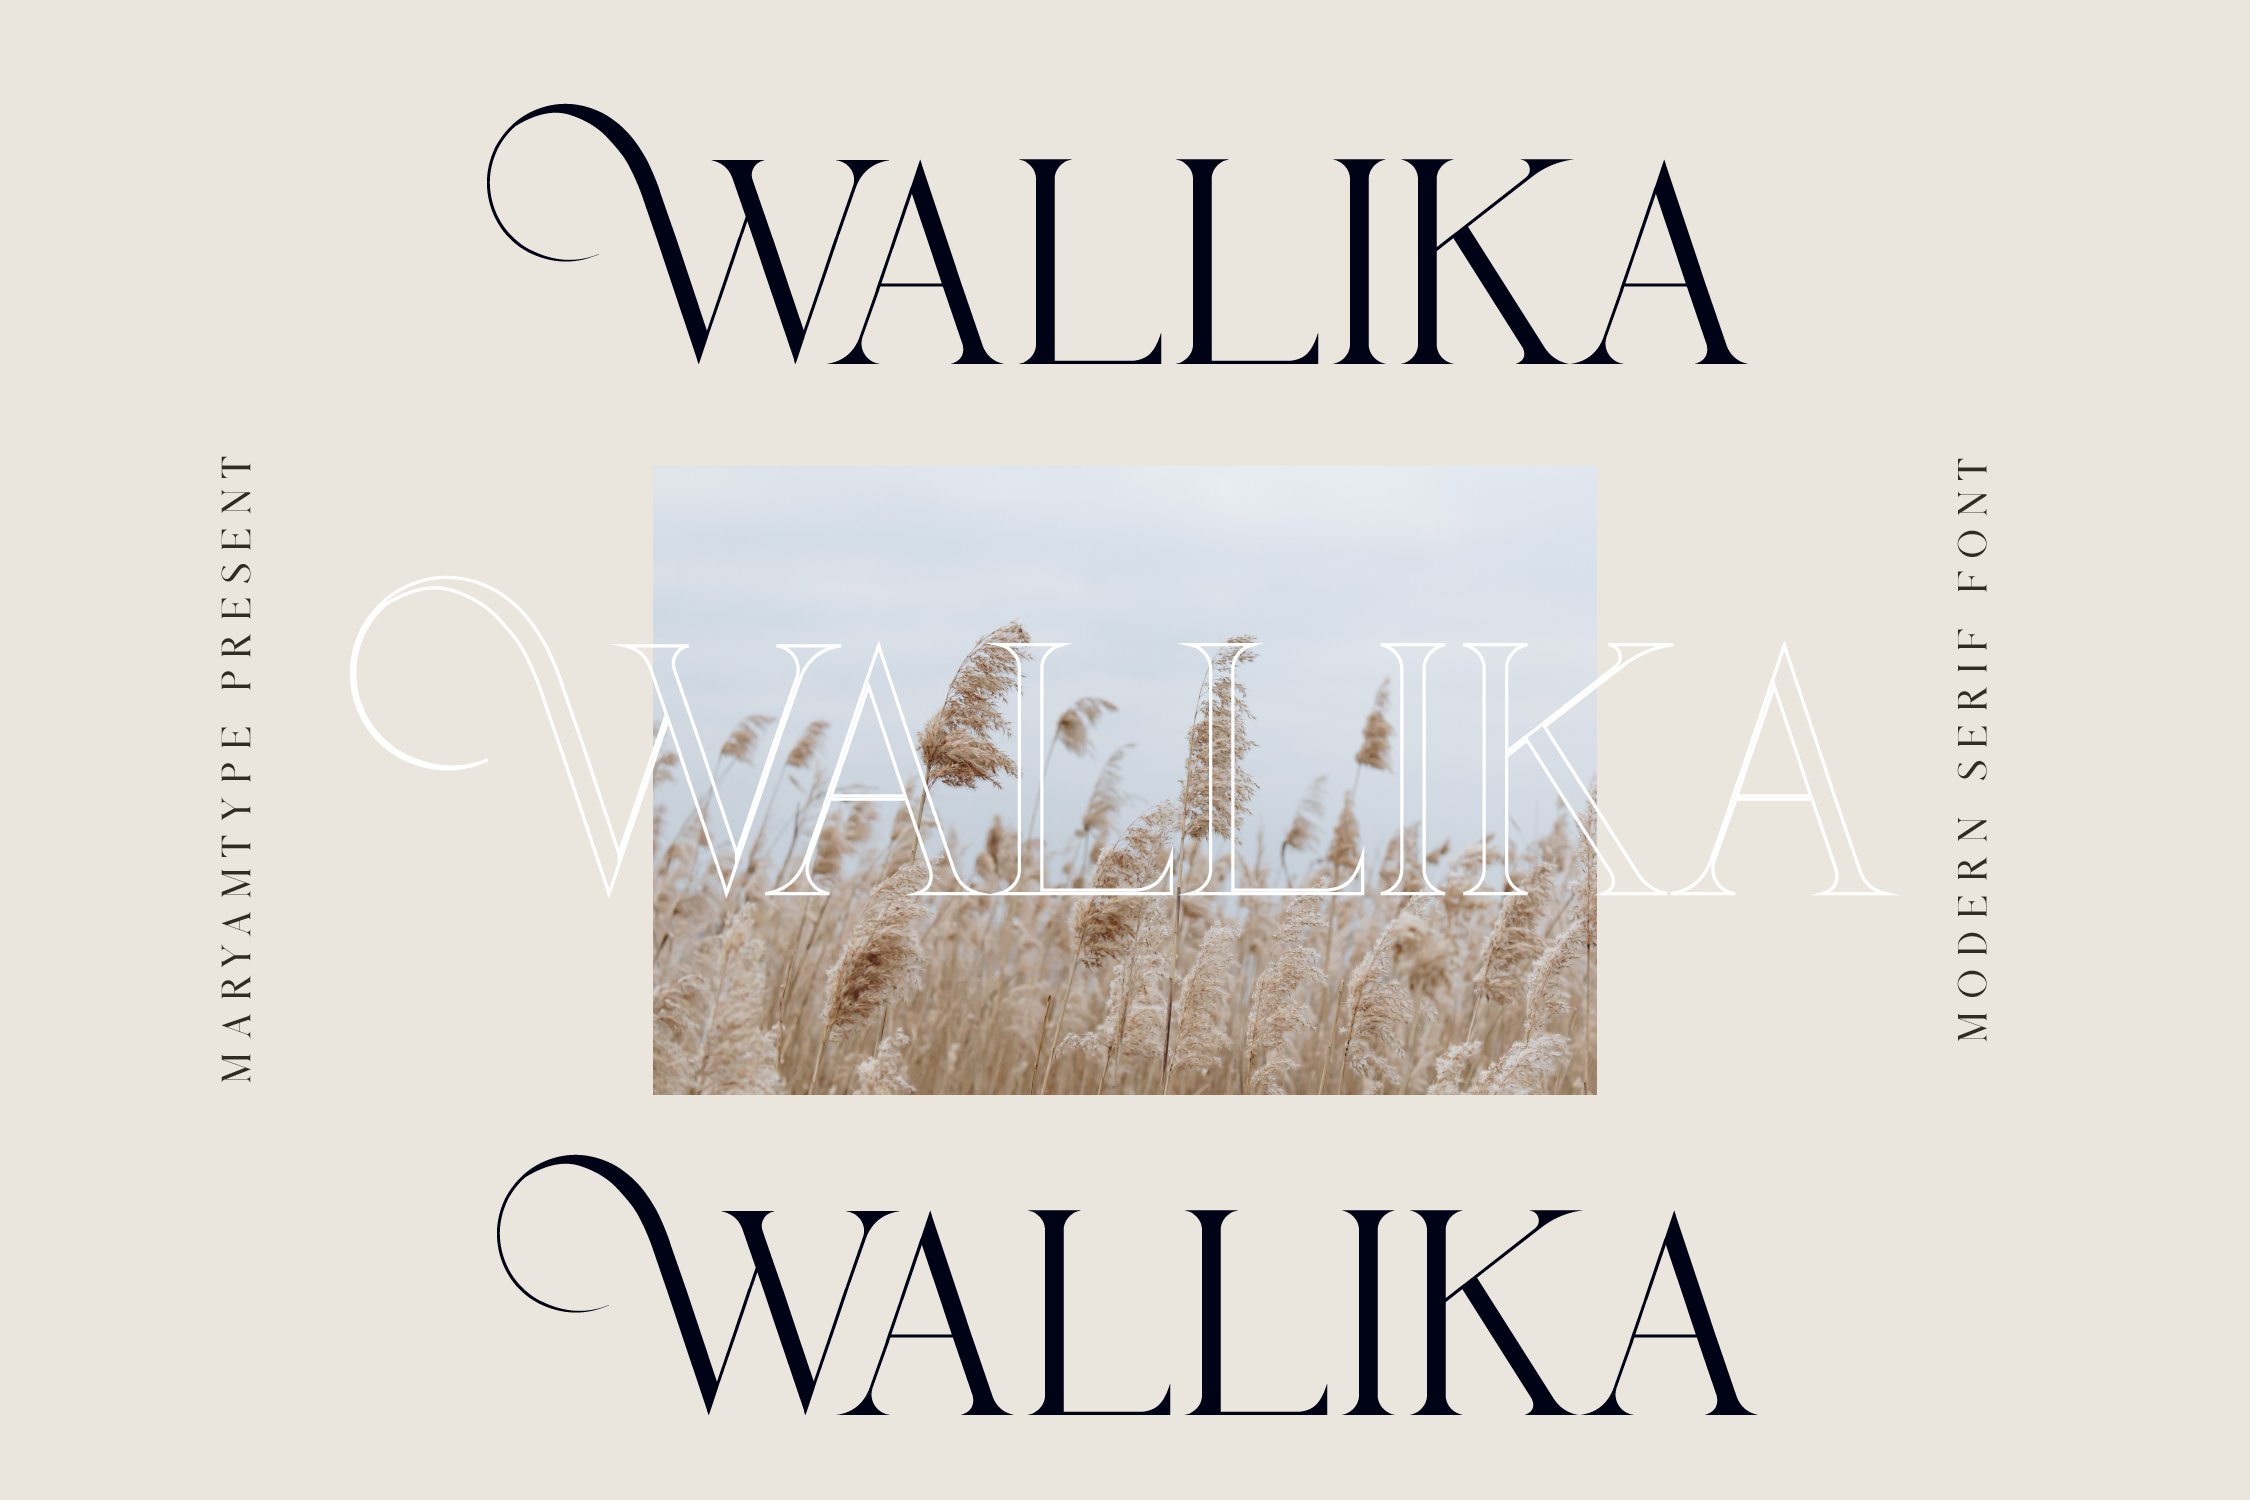 Wallika cover image.